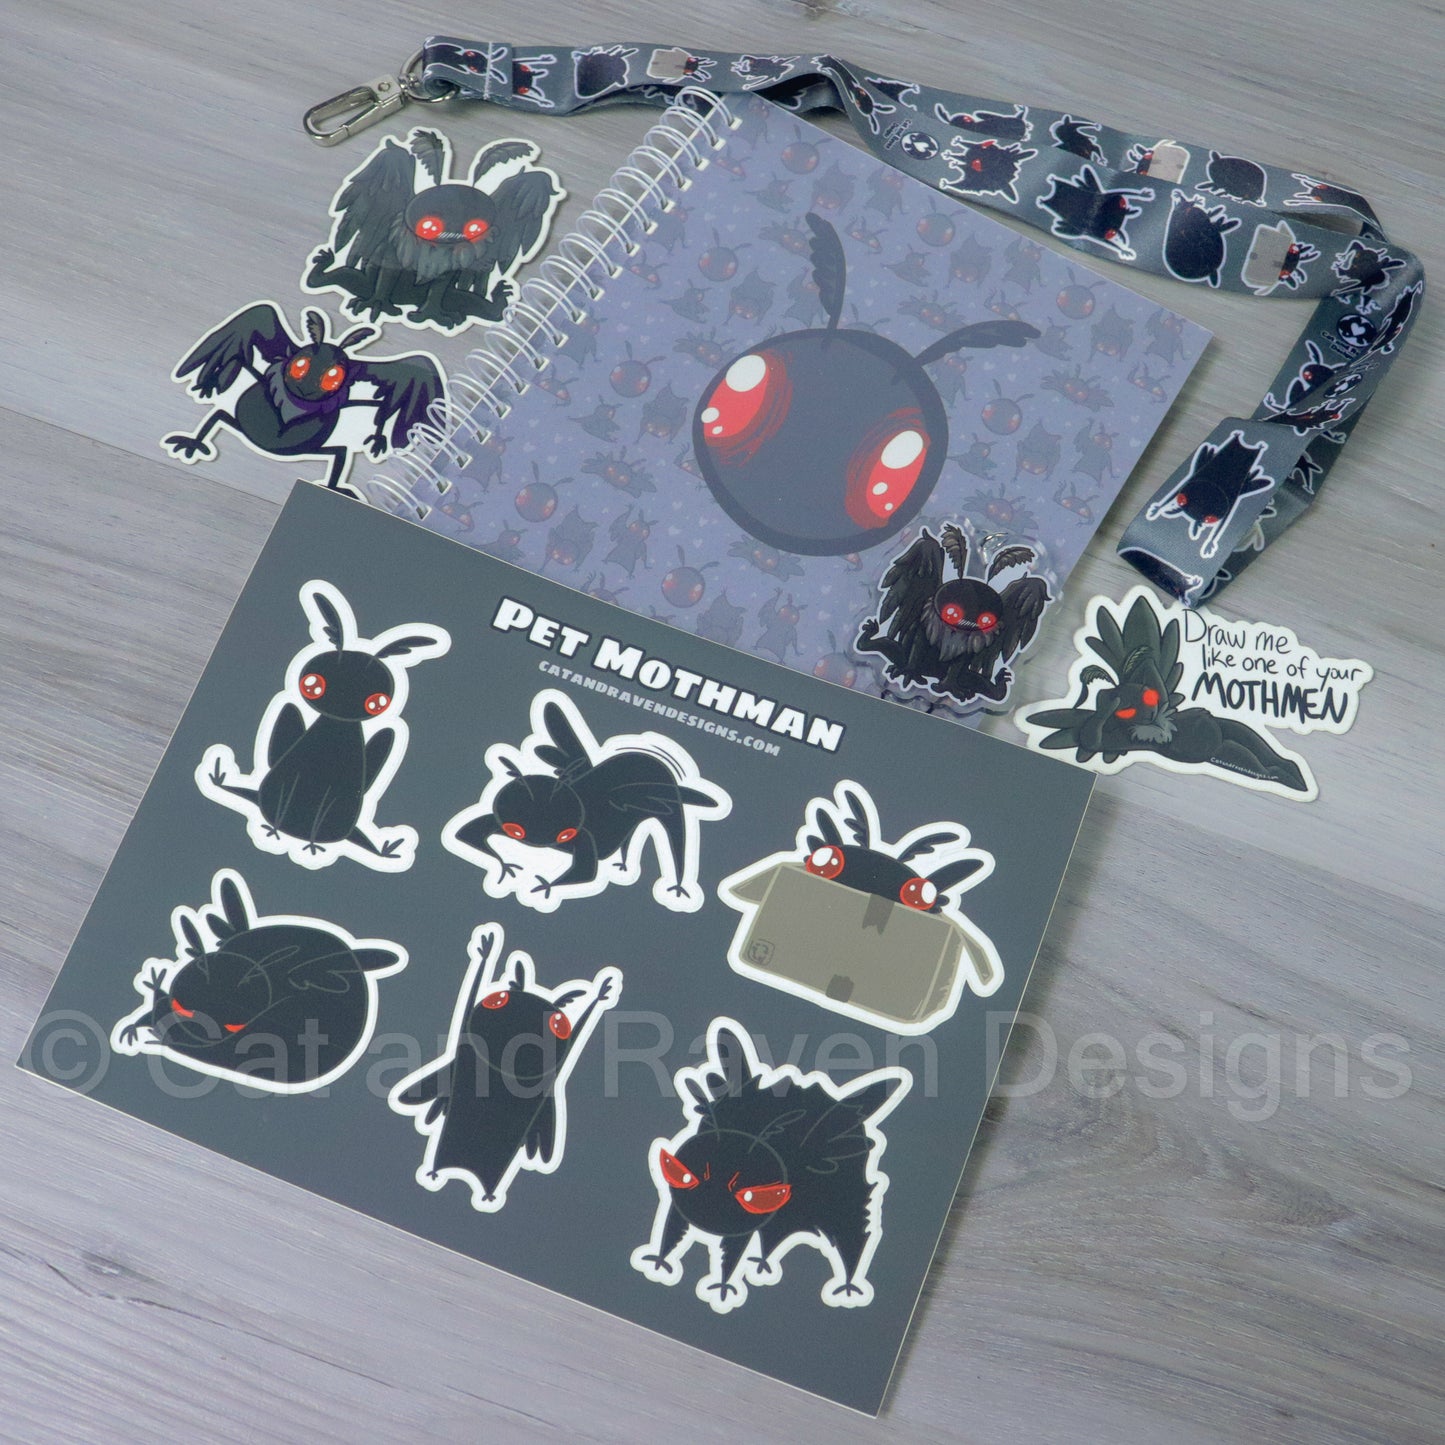 Mothman reusable sticker book – Cat and Raven Designs Soap